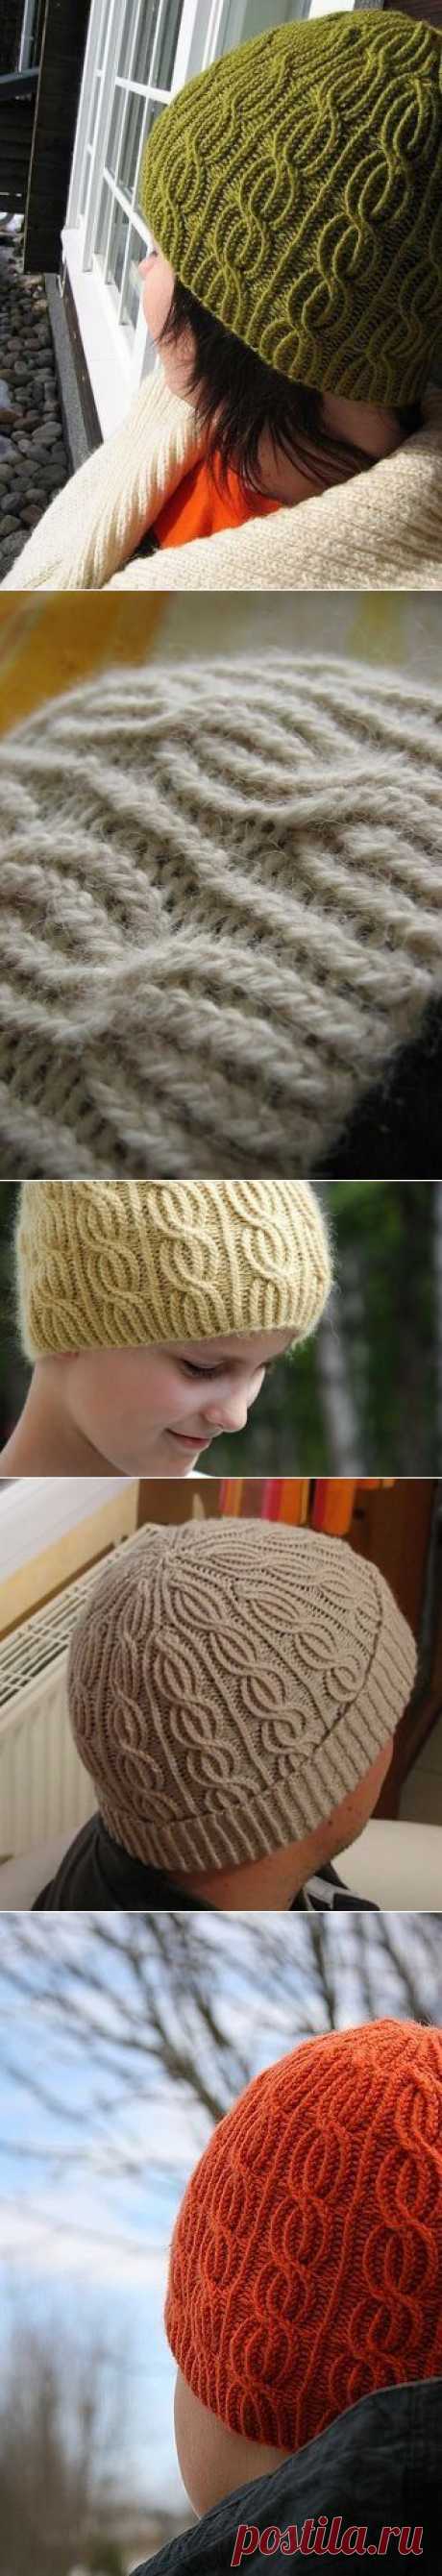 Вязание: шапка спицами «Lina»